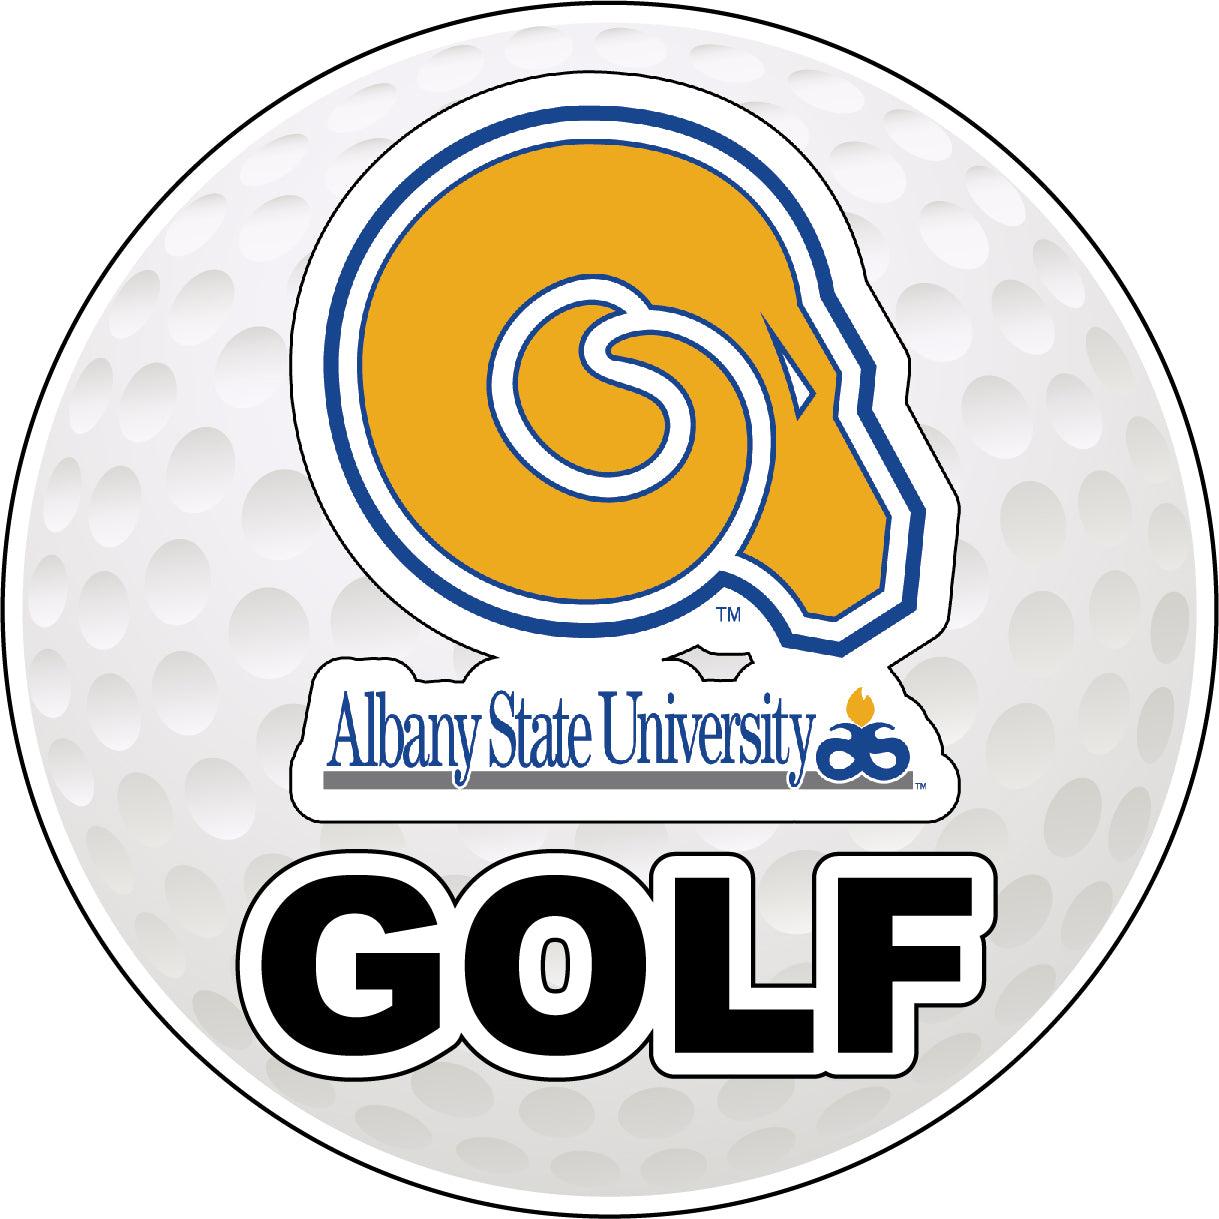 Albany State University 4-Inch Round Golf Ball Vinyl Decal Sticker